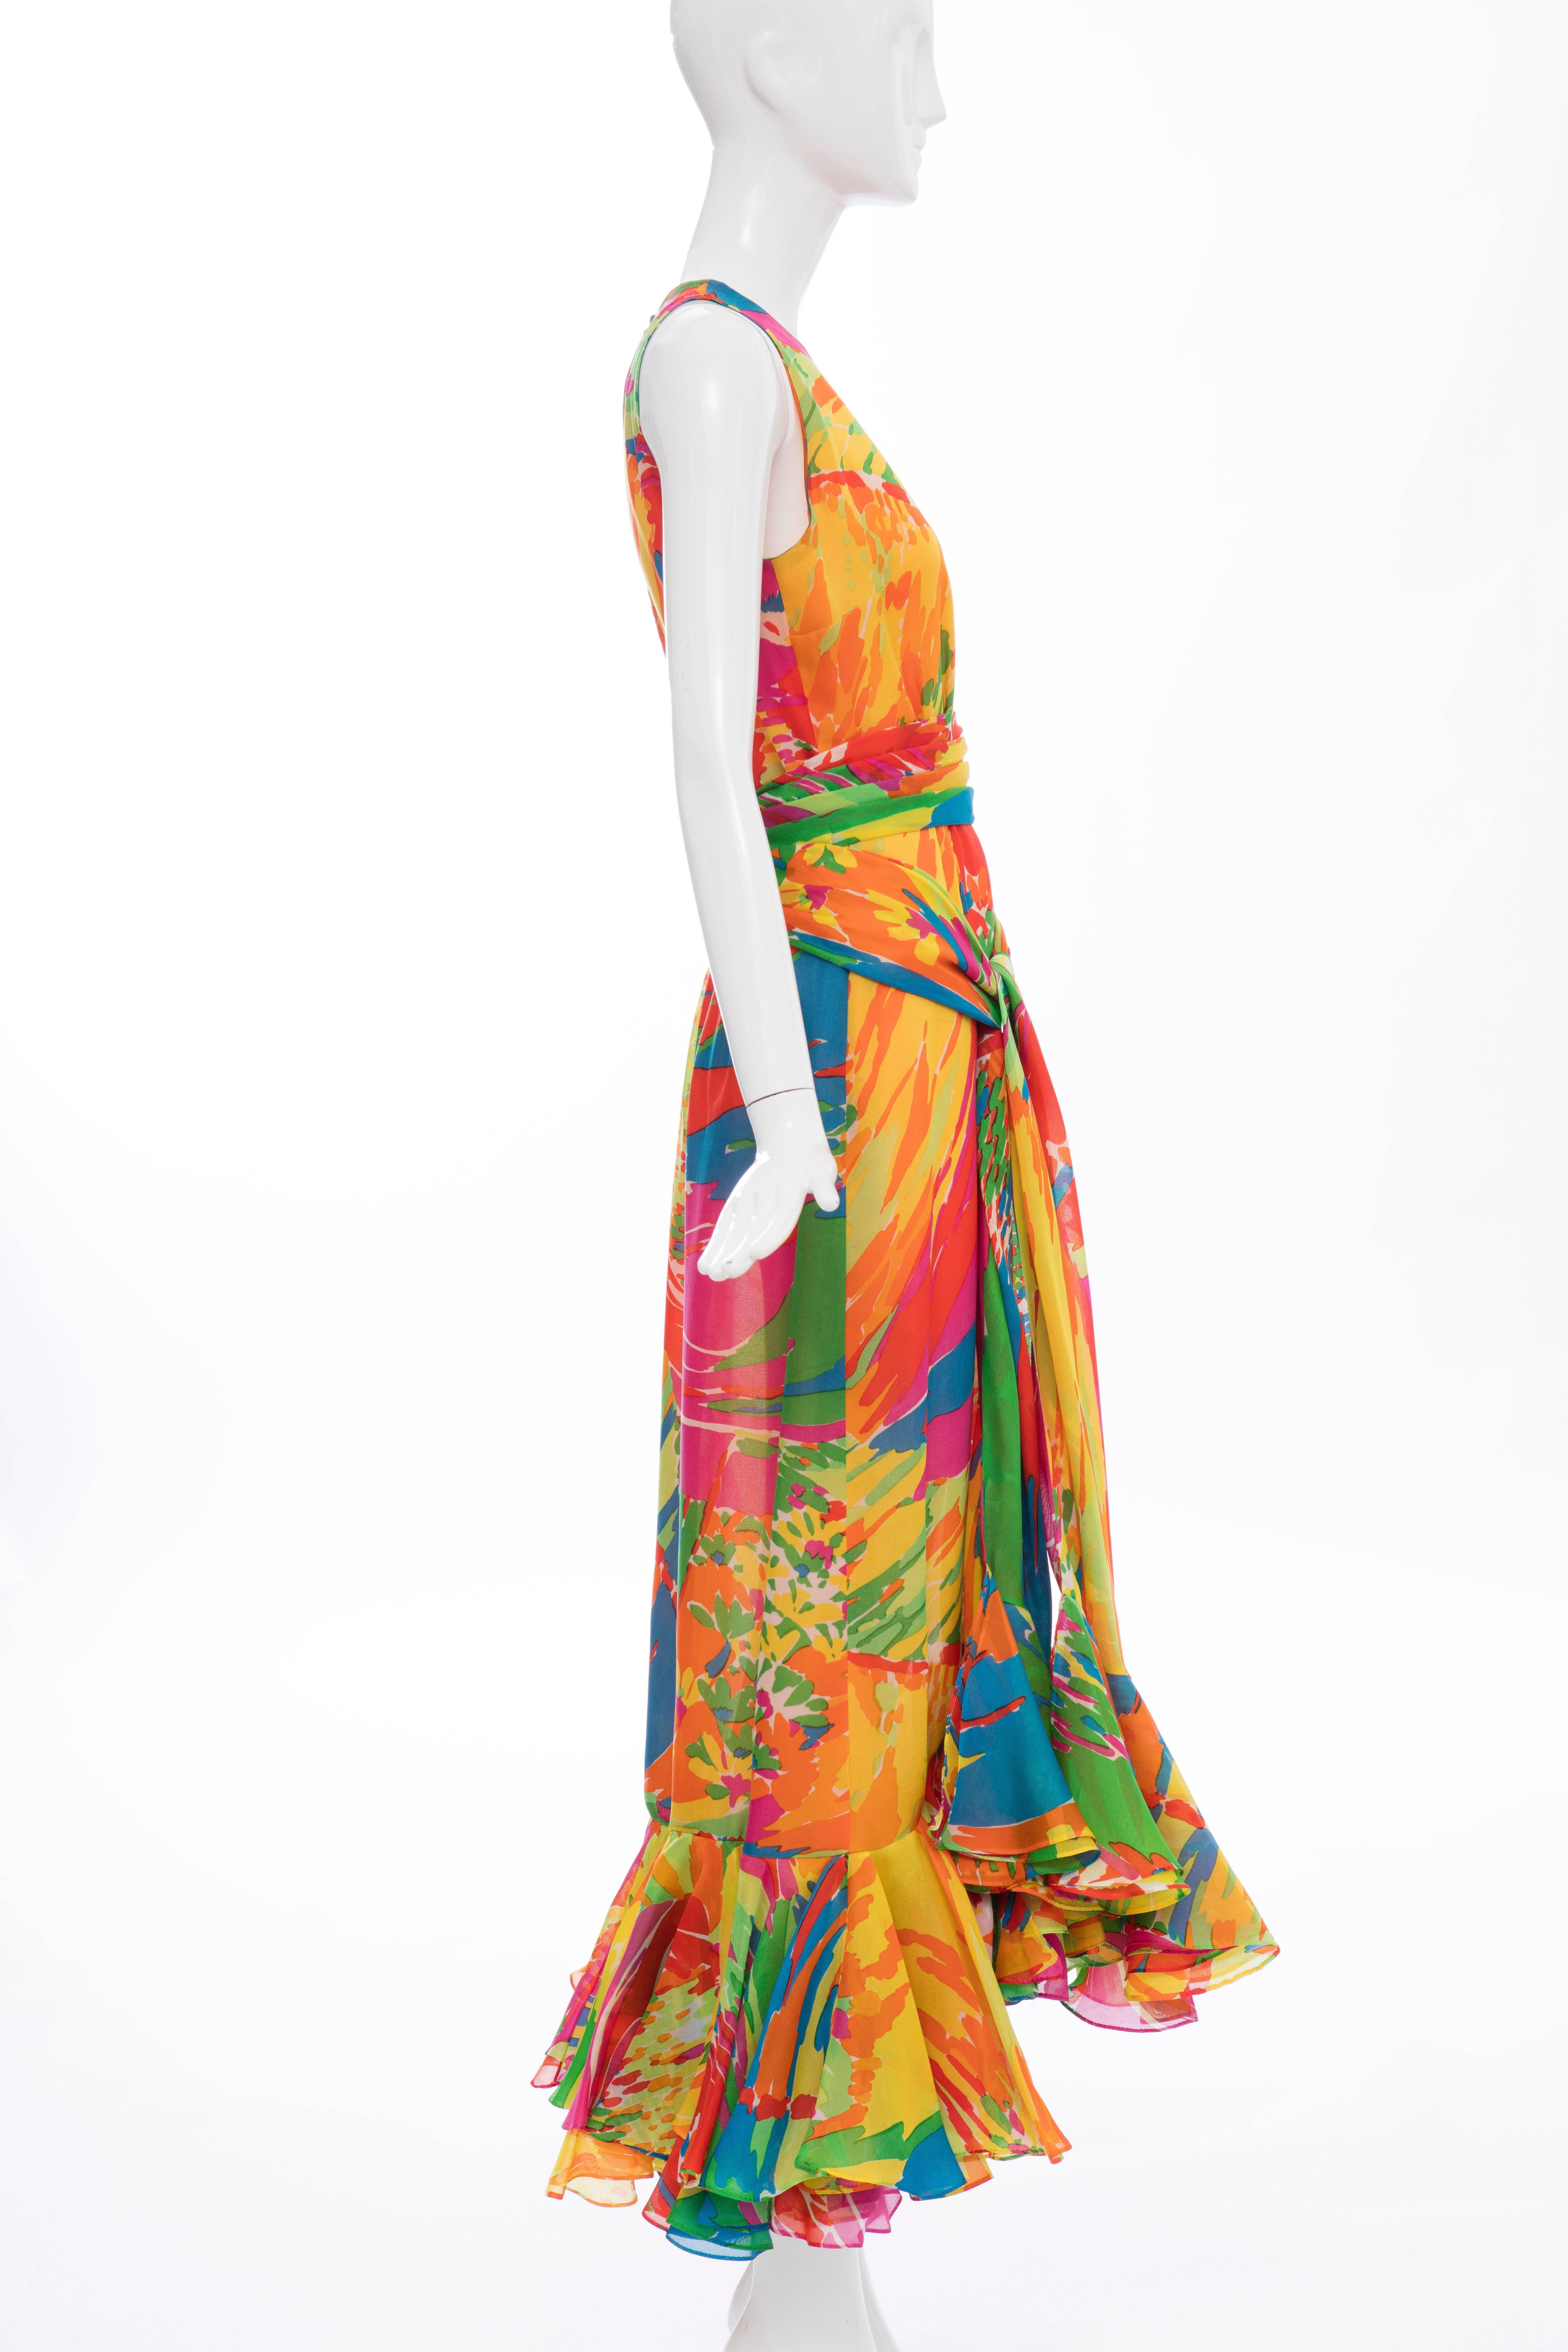 Orange Bill Blass Sleeveless Cotton Voile Abstract Print Evening Dress, Circa 1970's